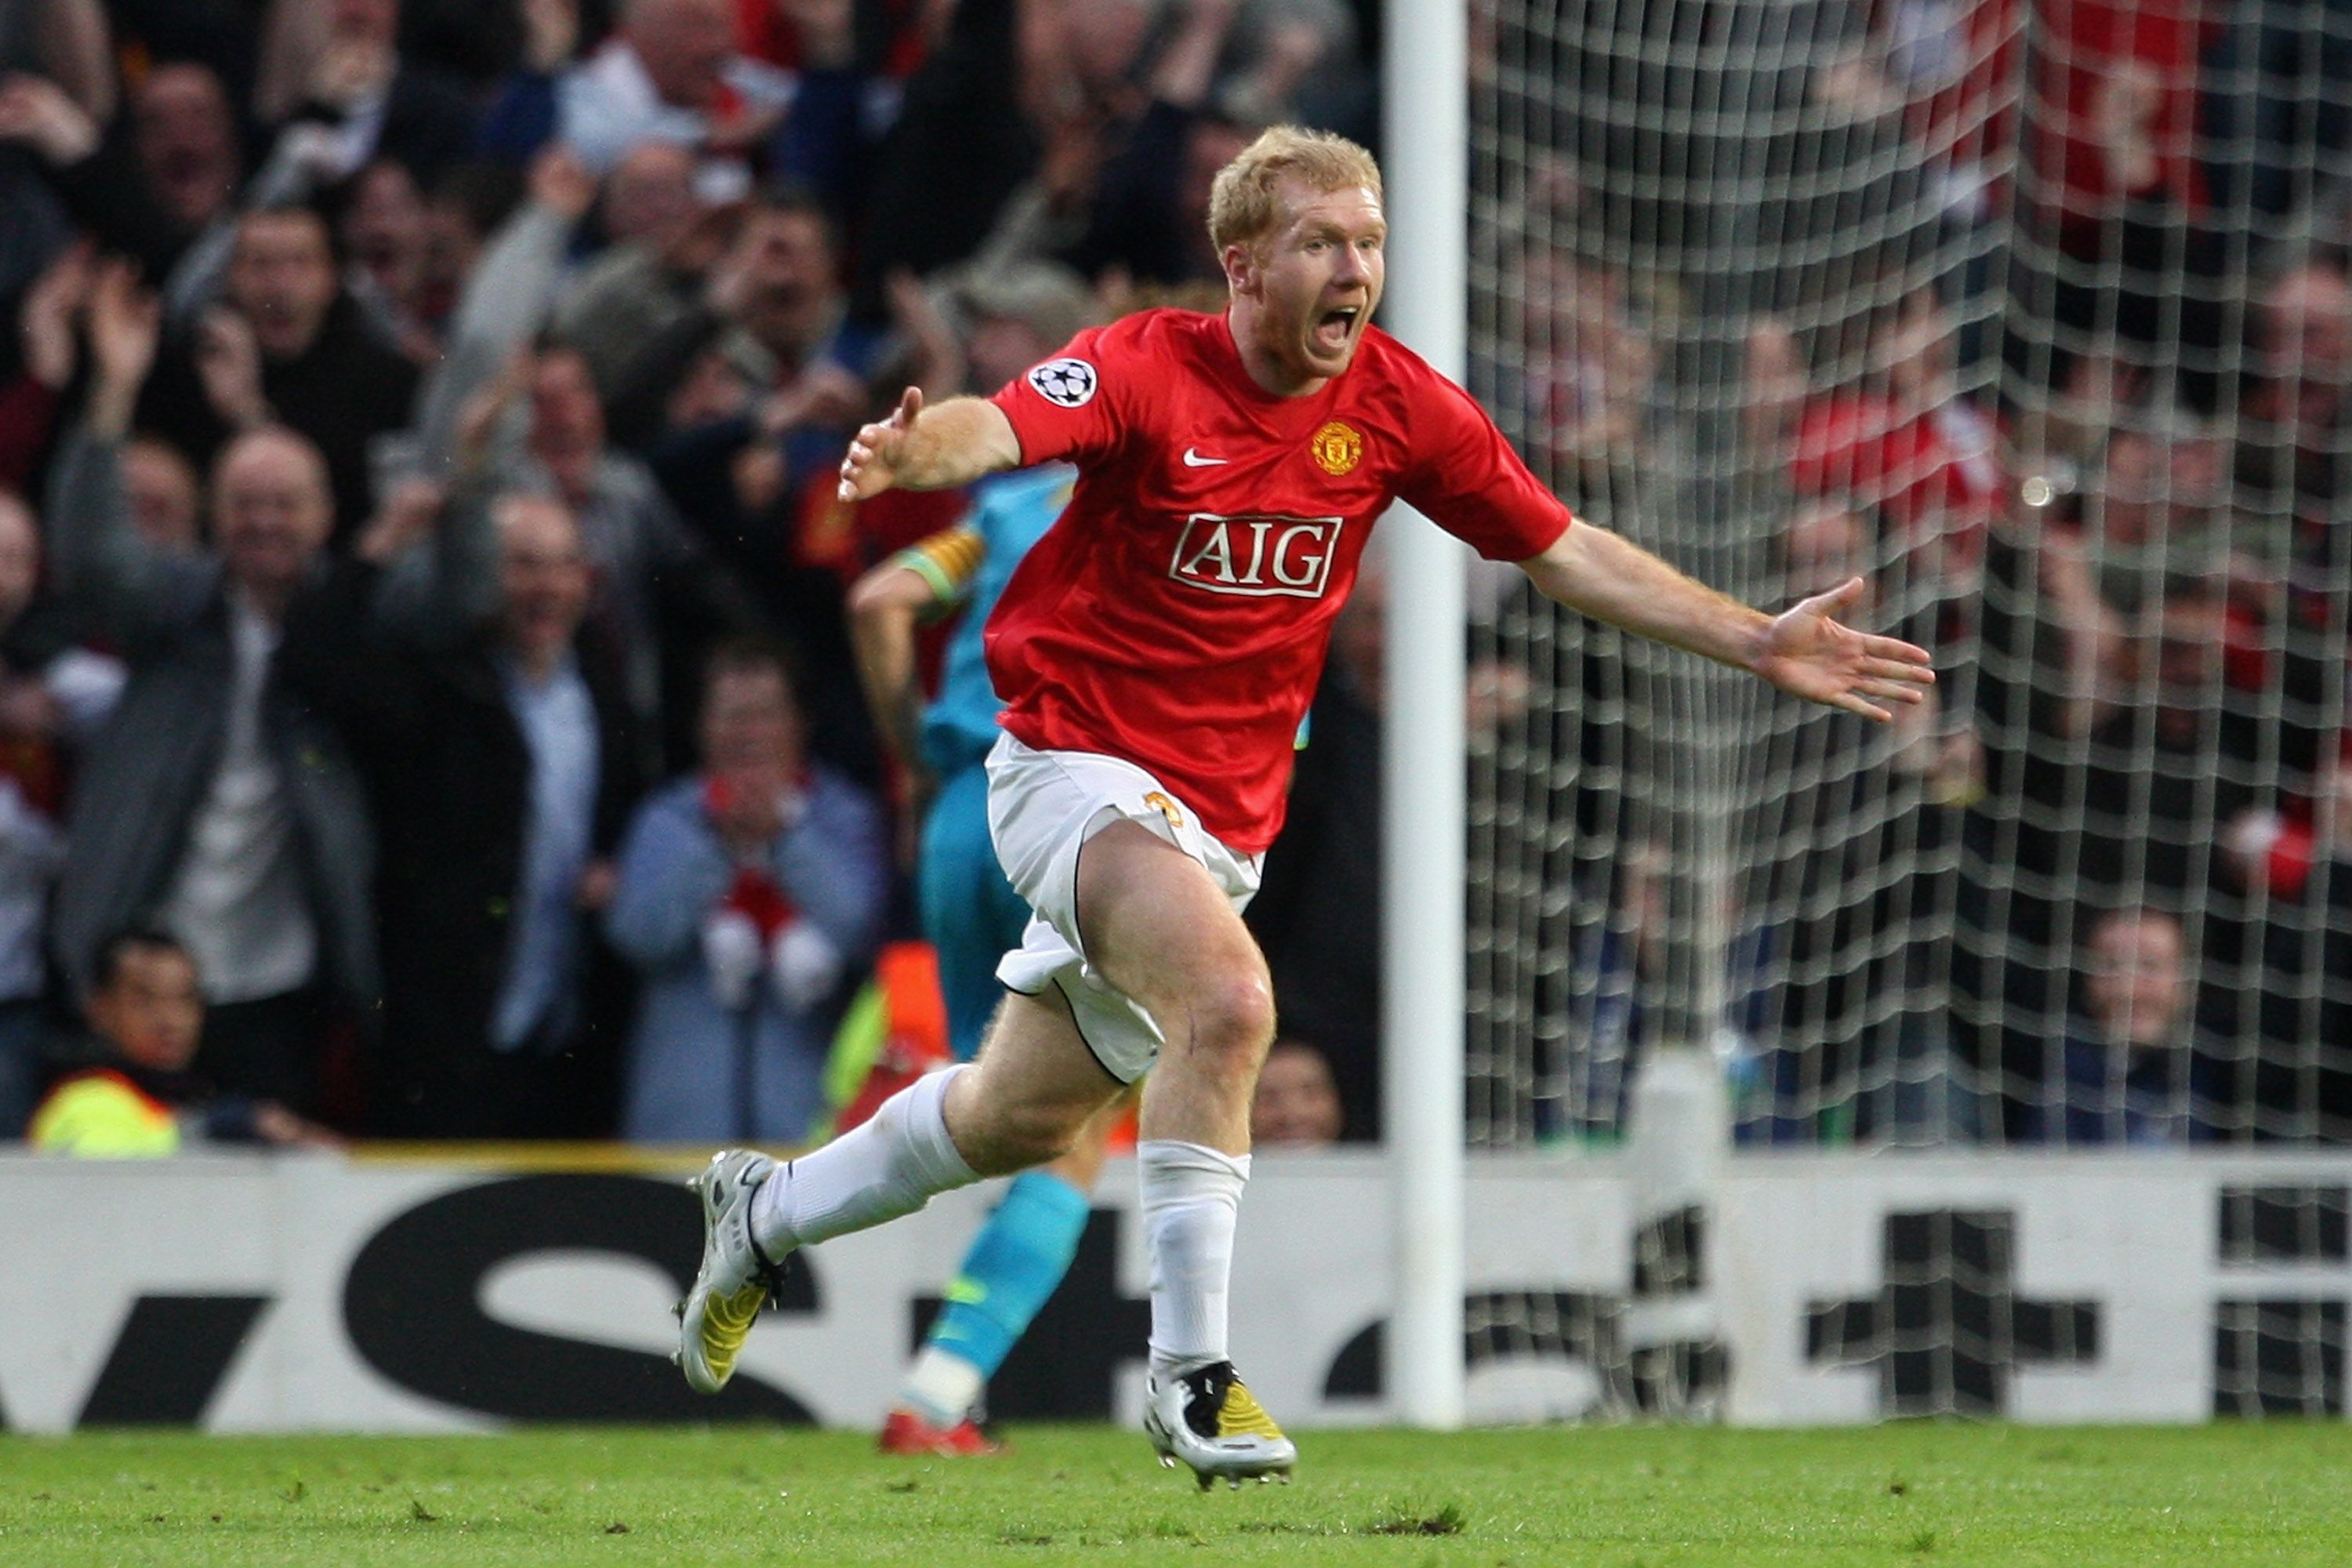 Paul Scholes celebrates a goal for Manchester United